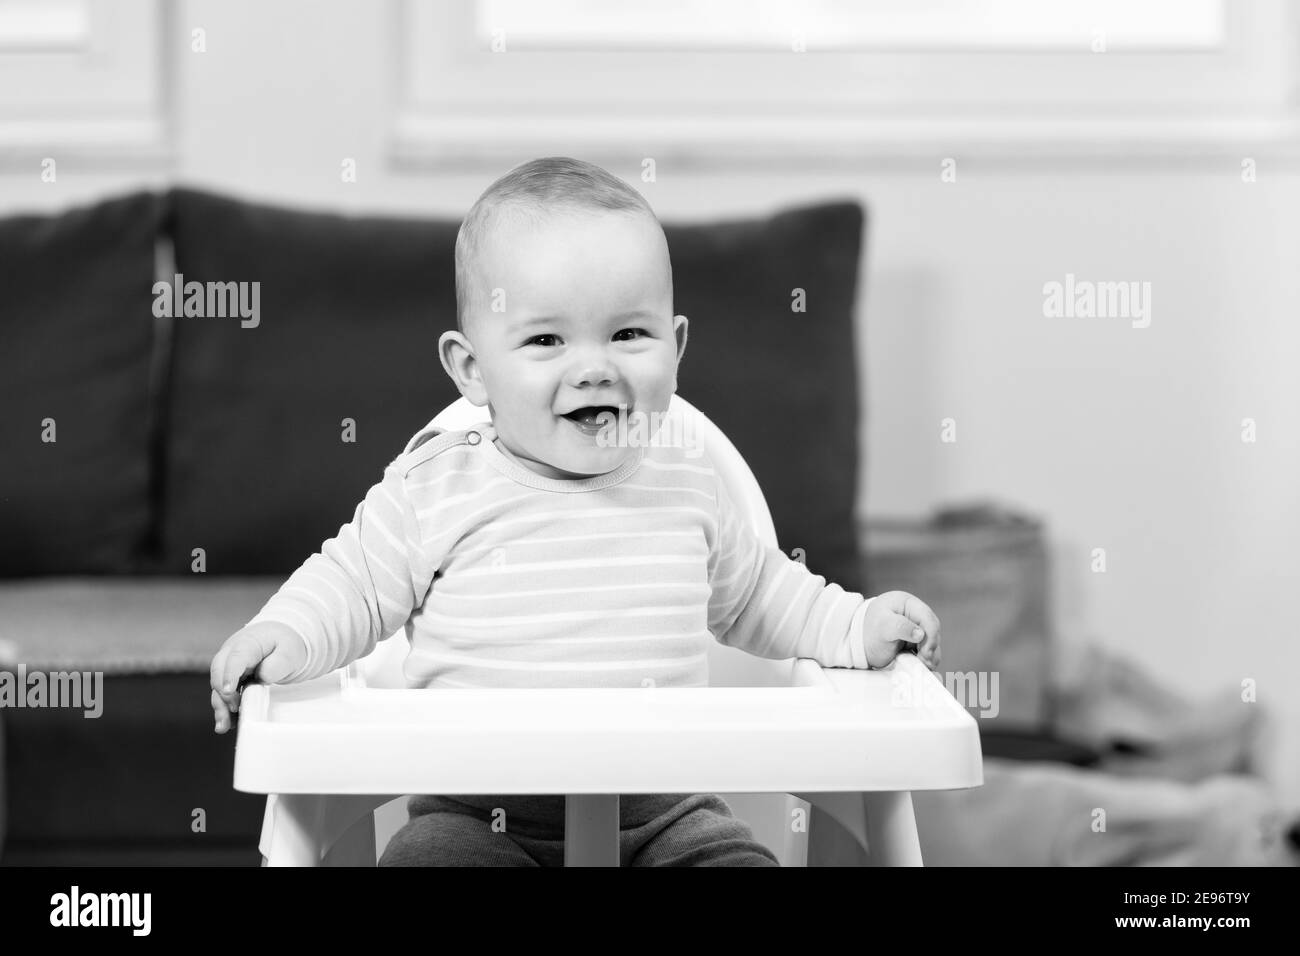 Portrait of a Joyful Baby Sitting on a High Chair Stock Photo